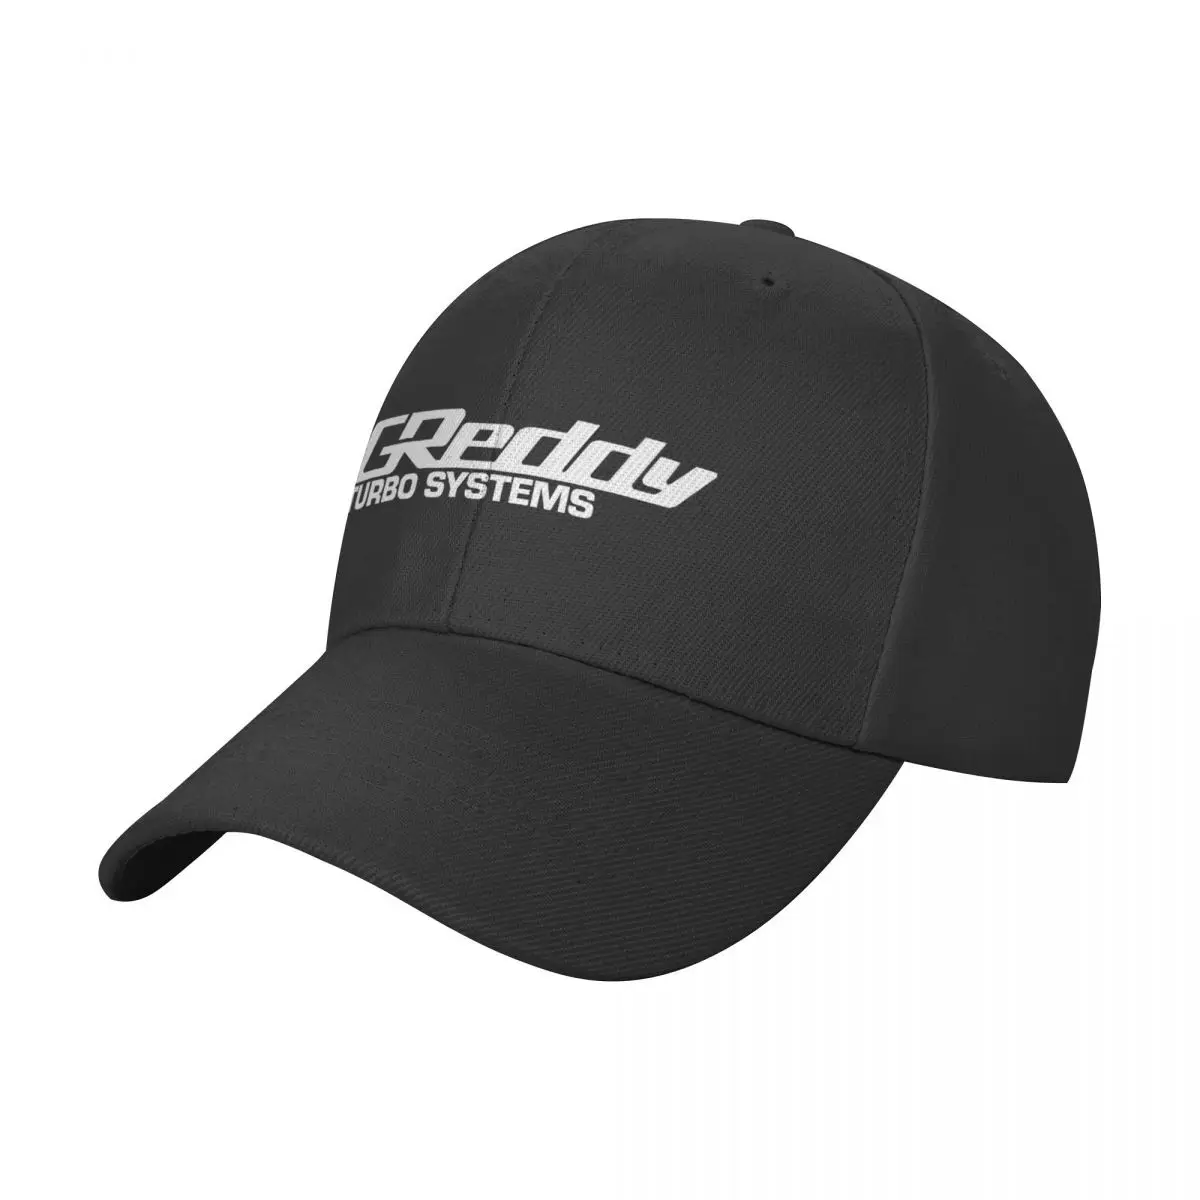 

GReddy Turbo Systems Baseball Cap for Men Women Classic Dad Hat Plain Cap Low Profile